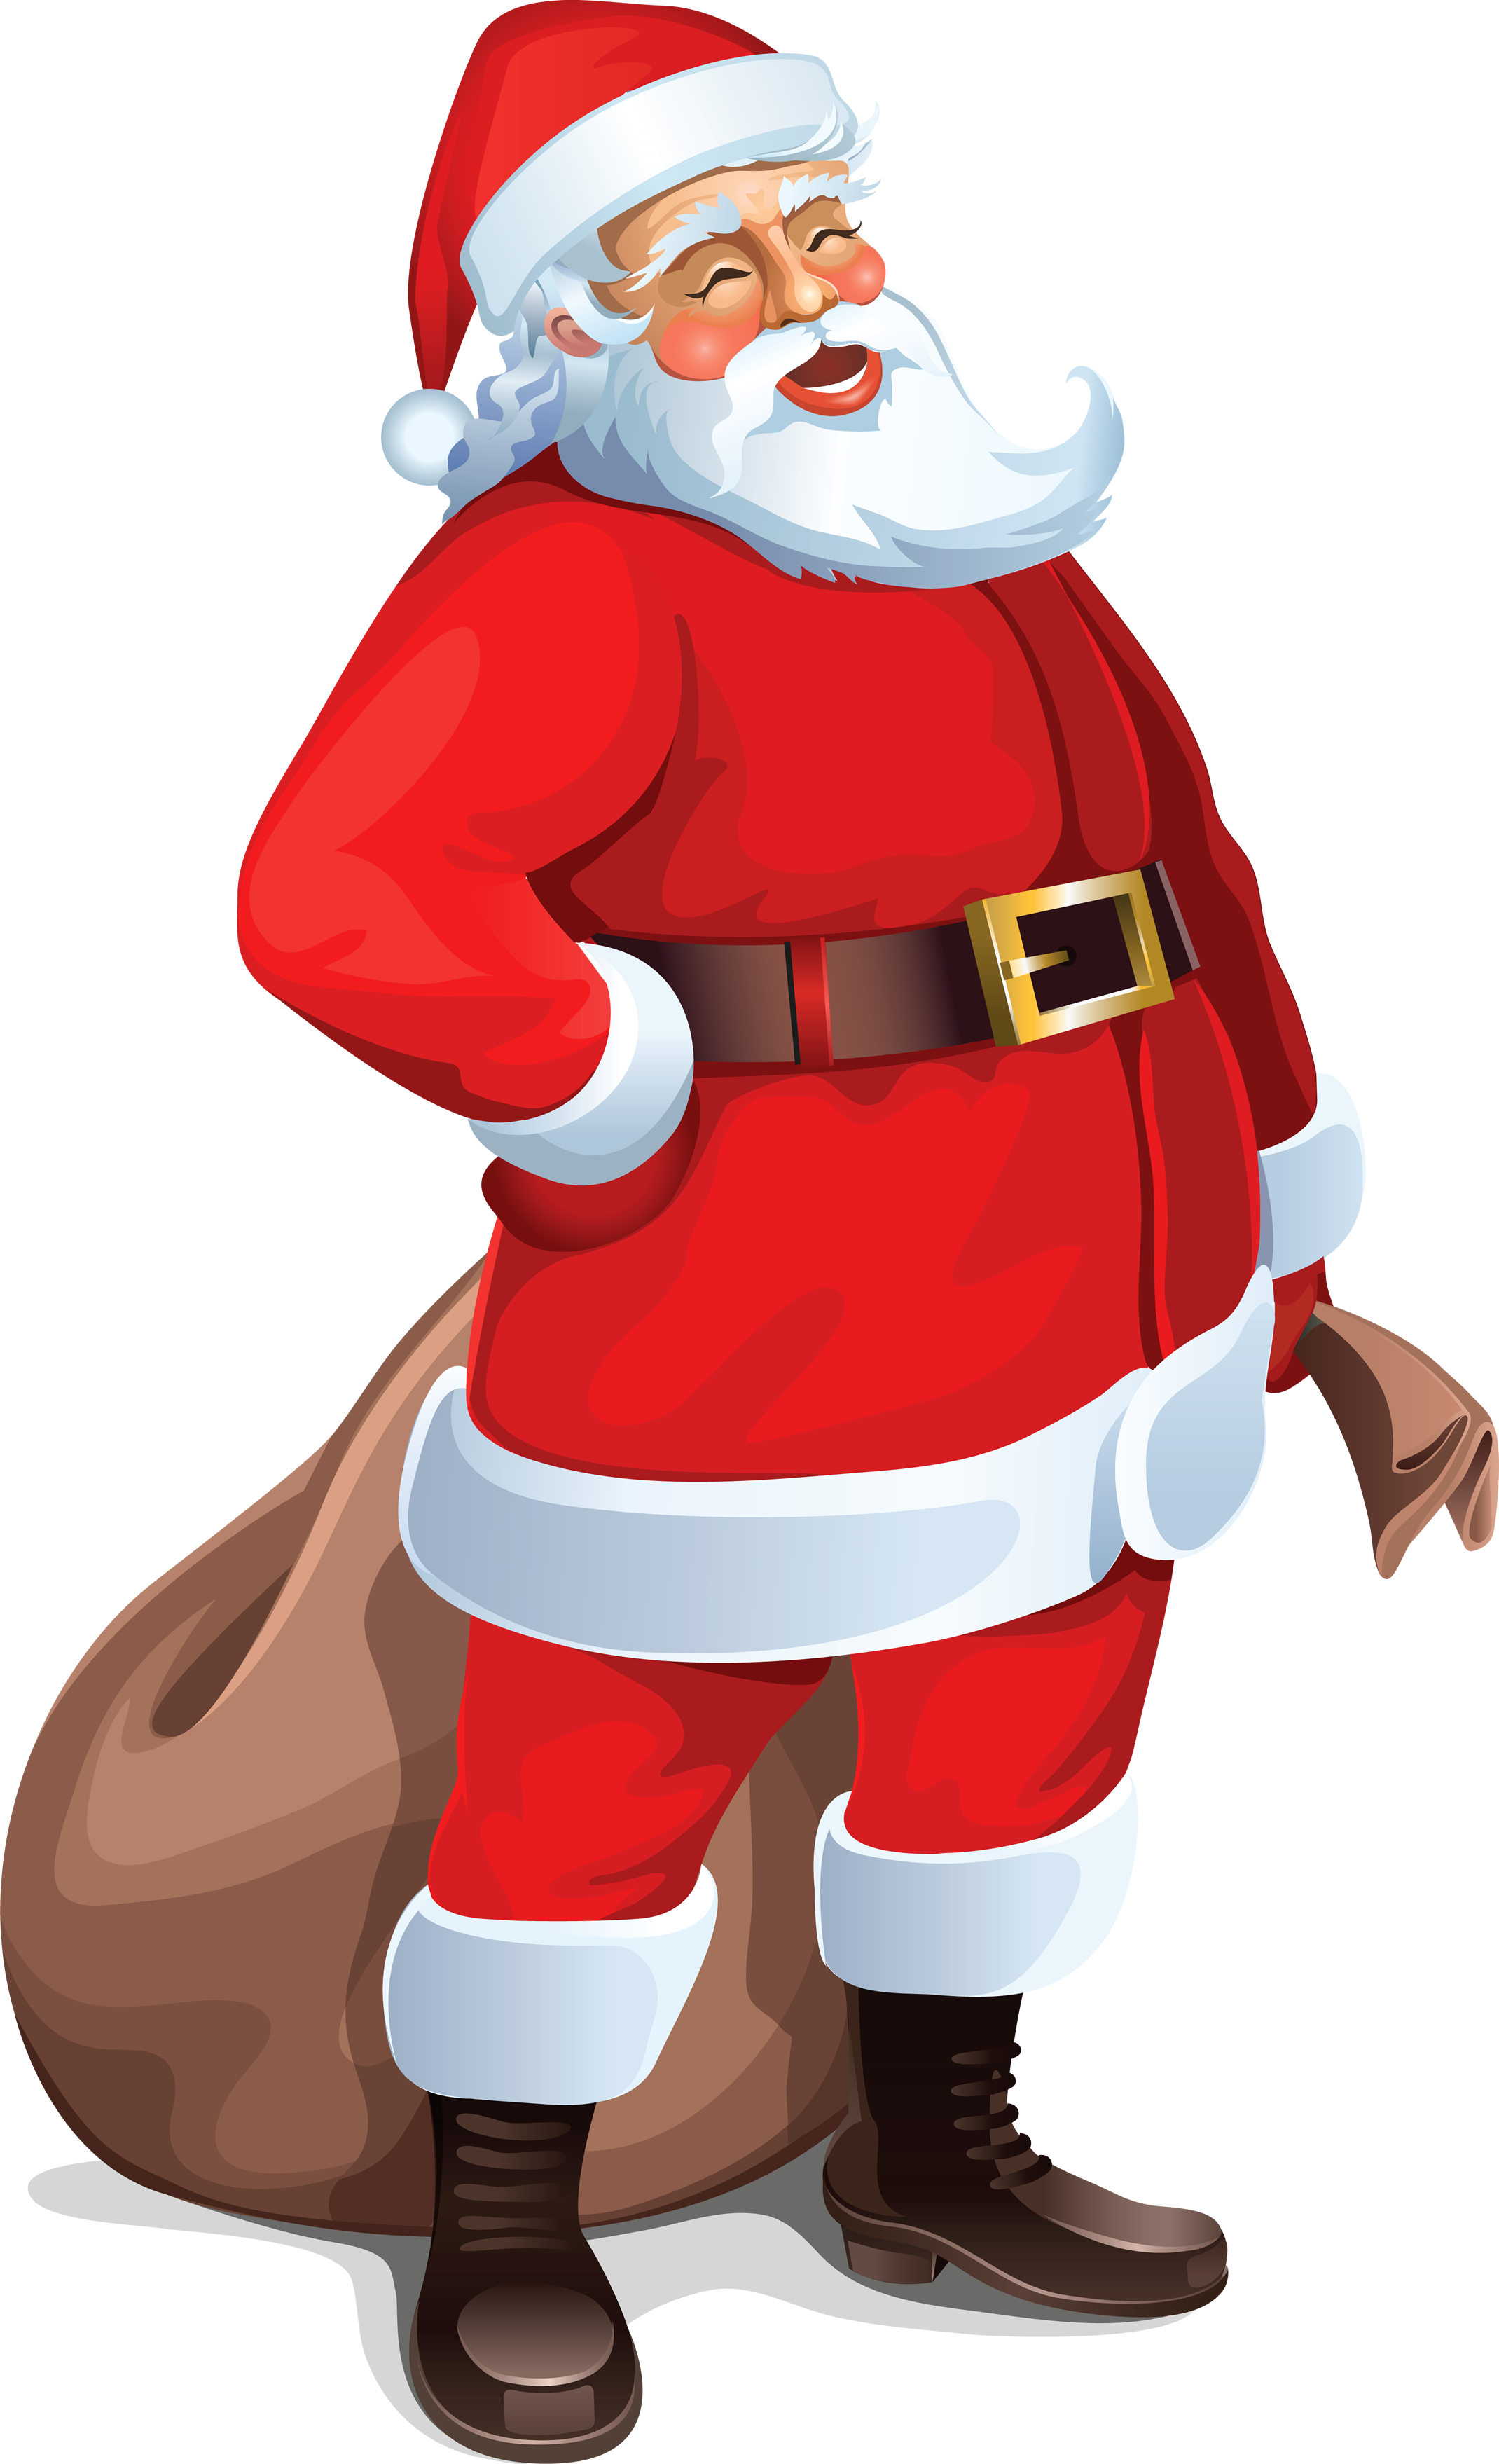 Santa Claus PNG Images Transparent Free Download | PNGMart.com